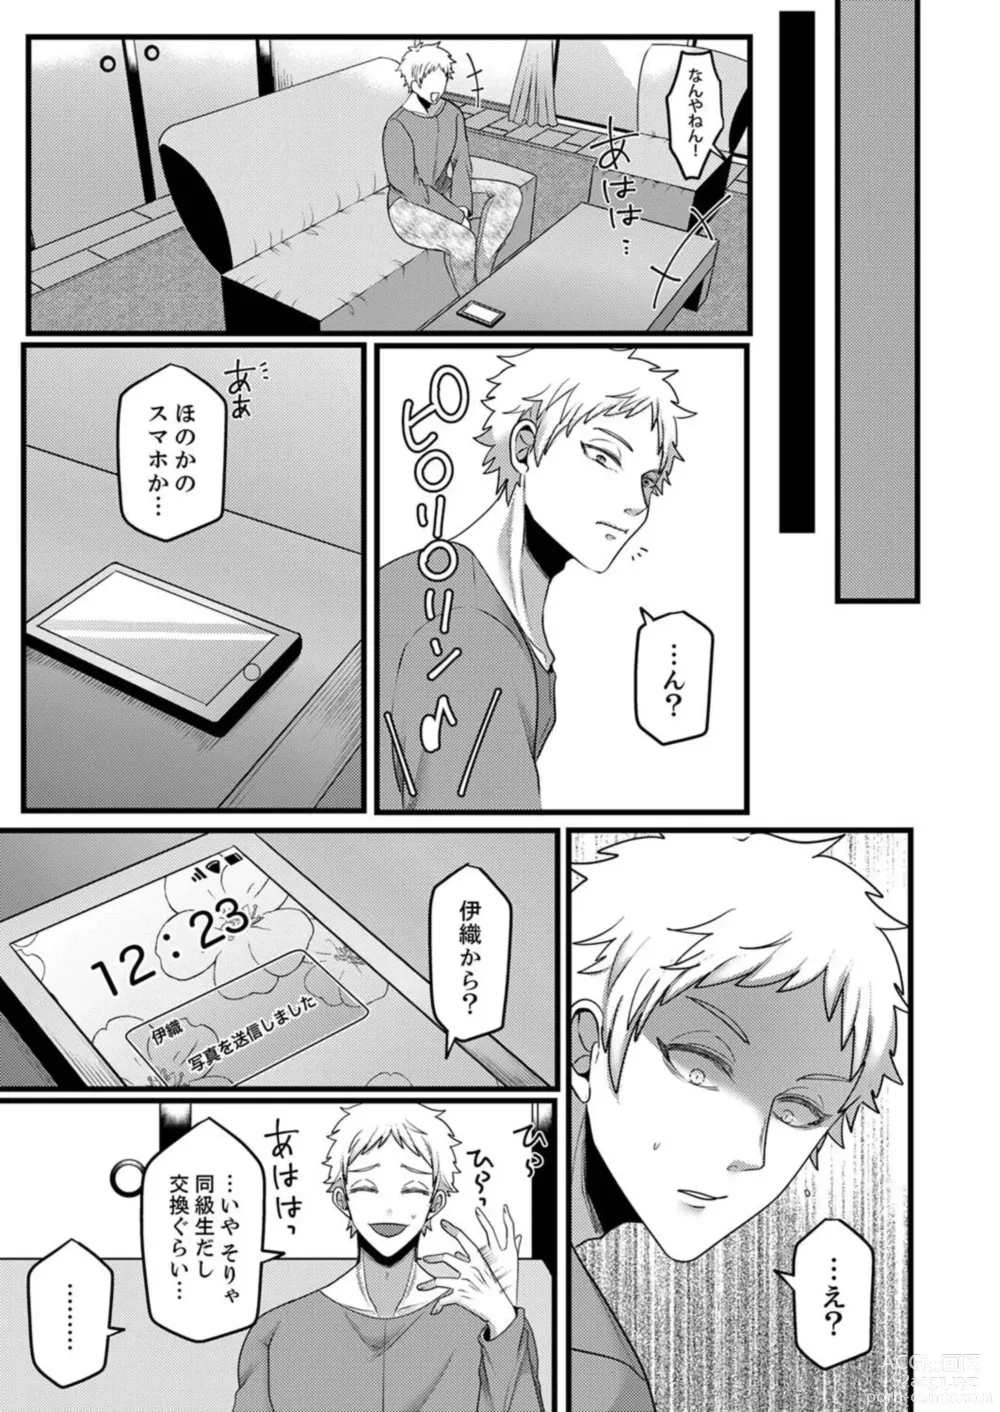 Page 160 of manga Kyohiken Nante Nain da Yo